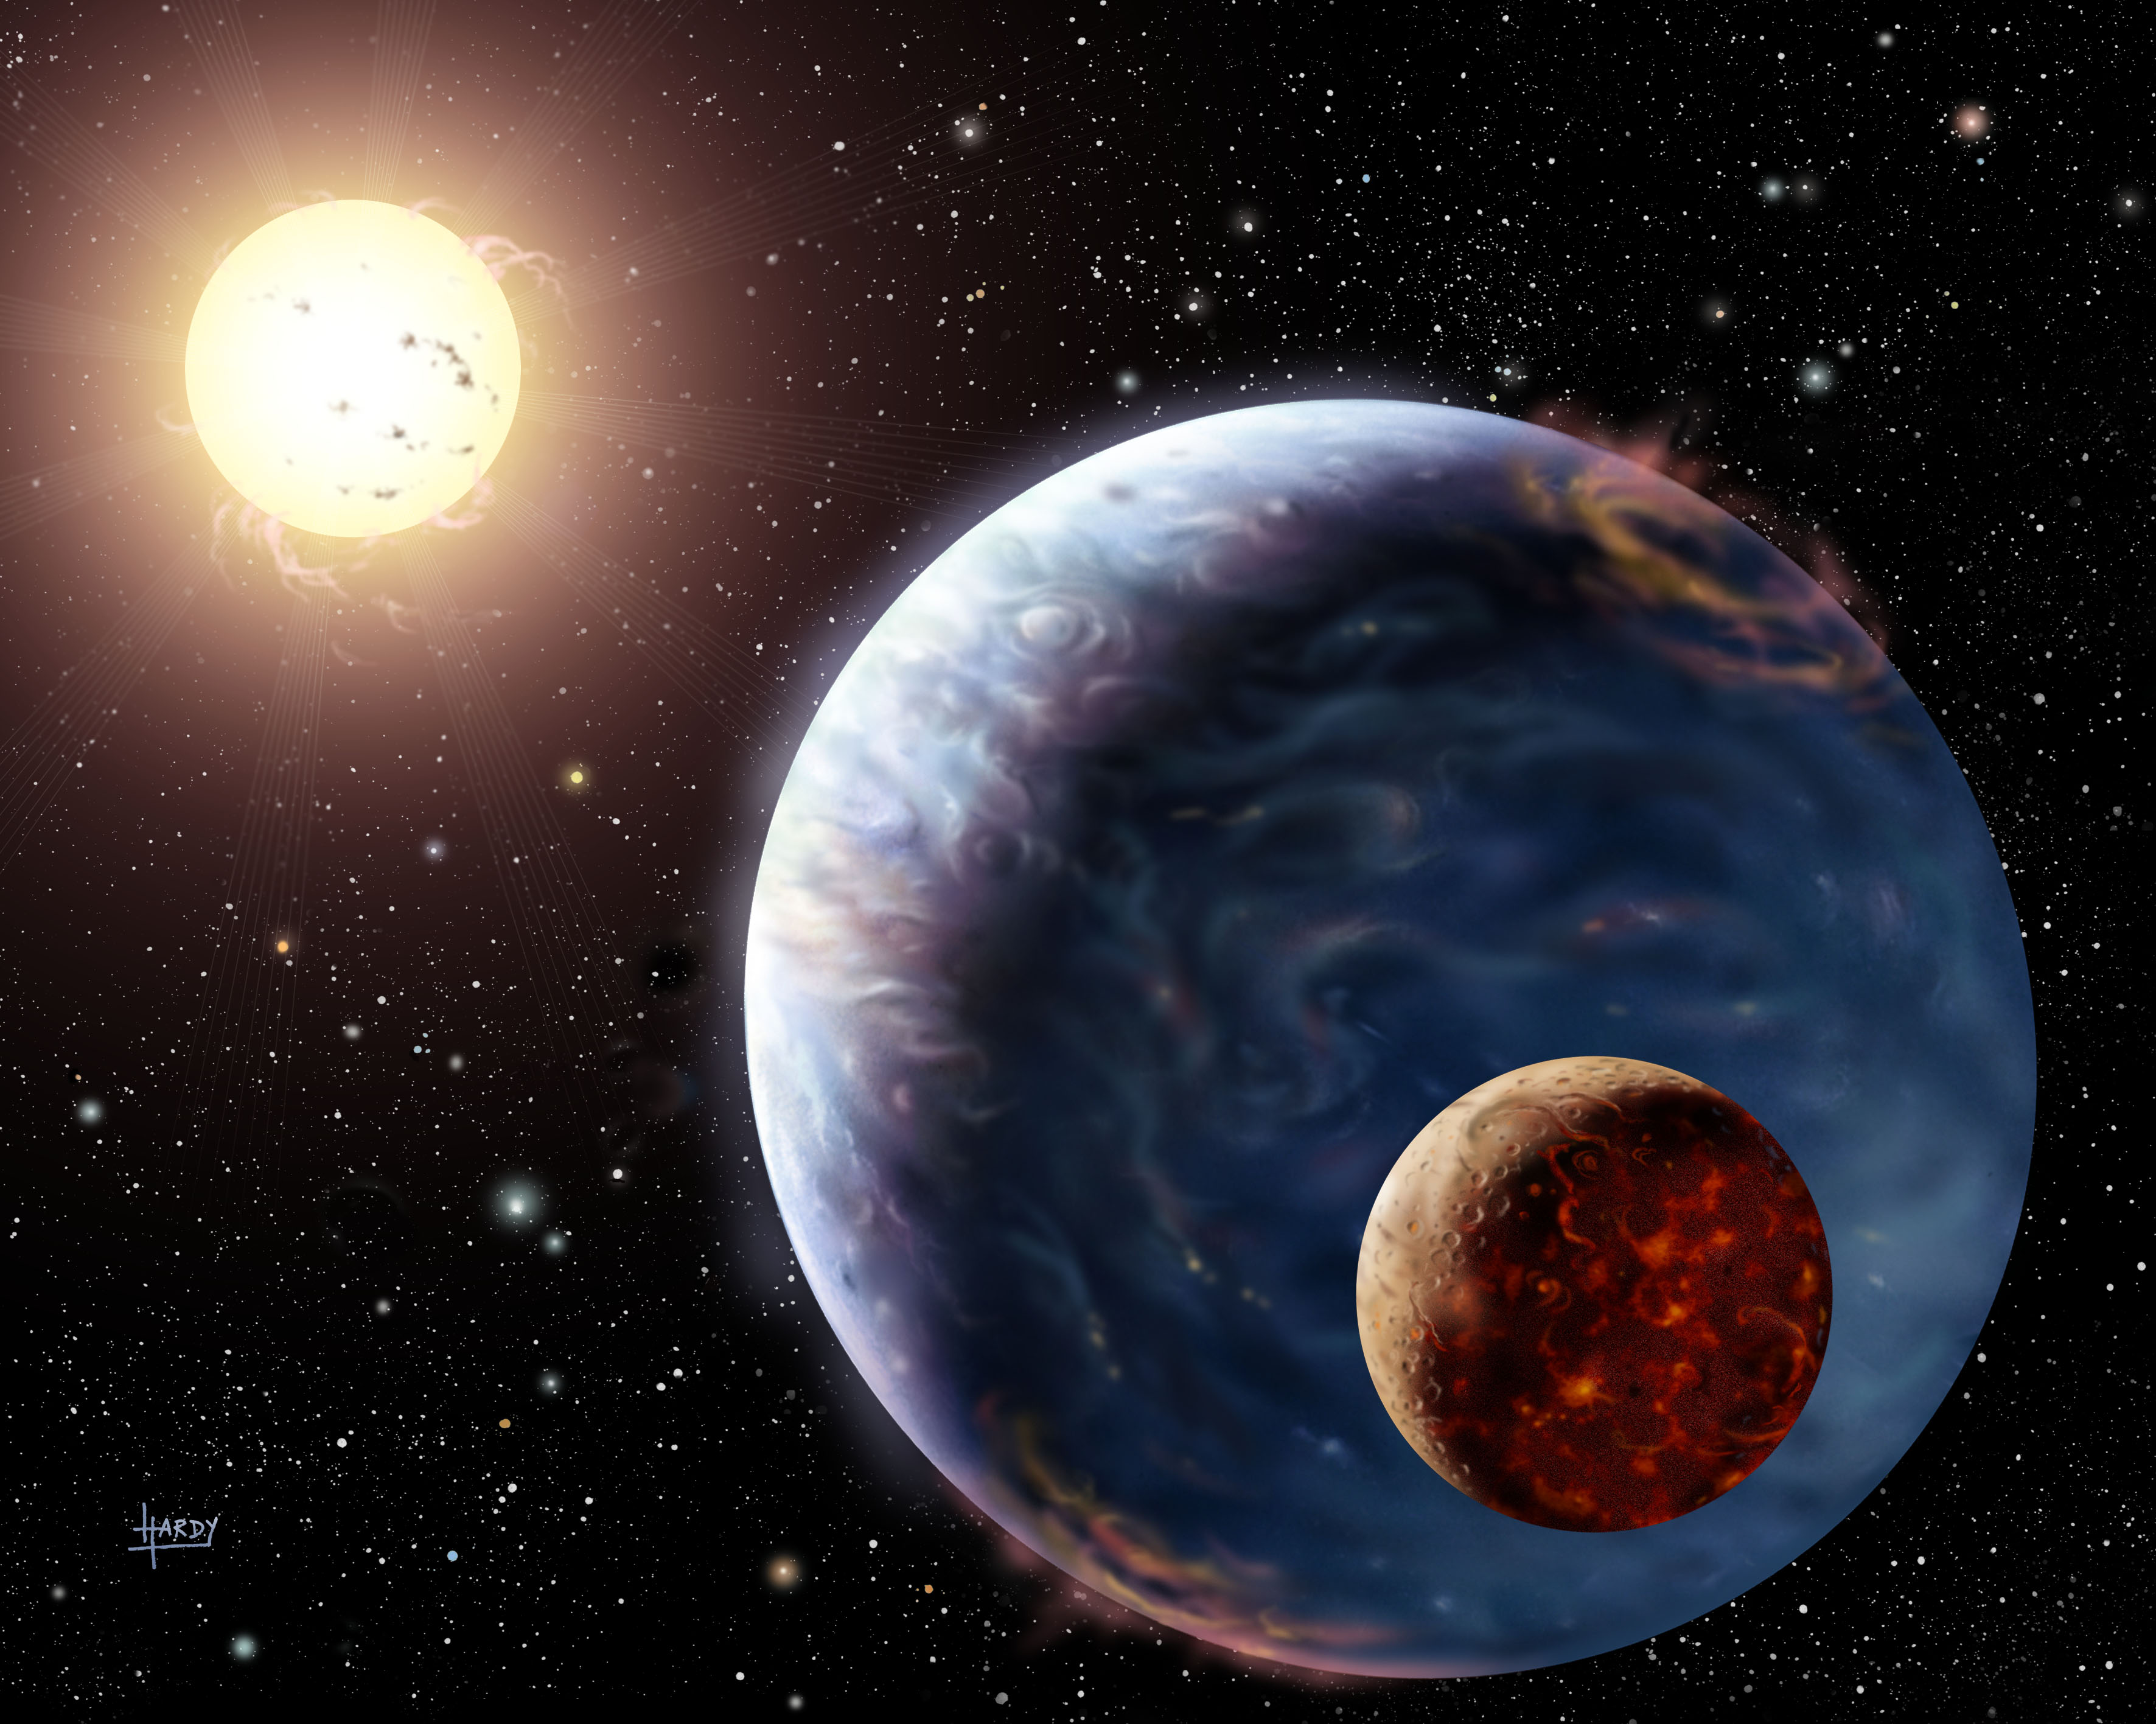 Exoplanet impression